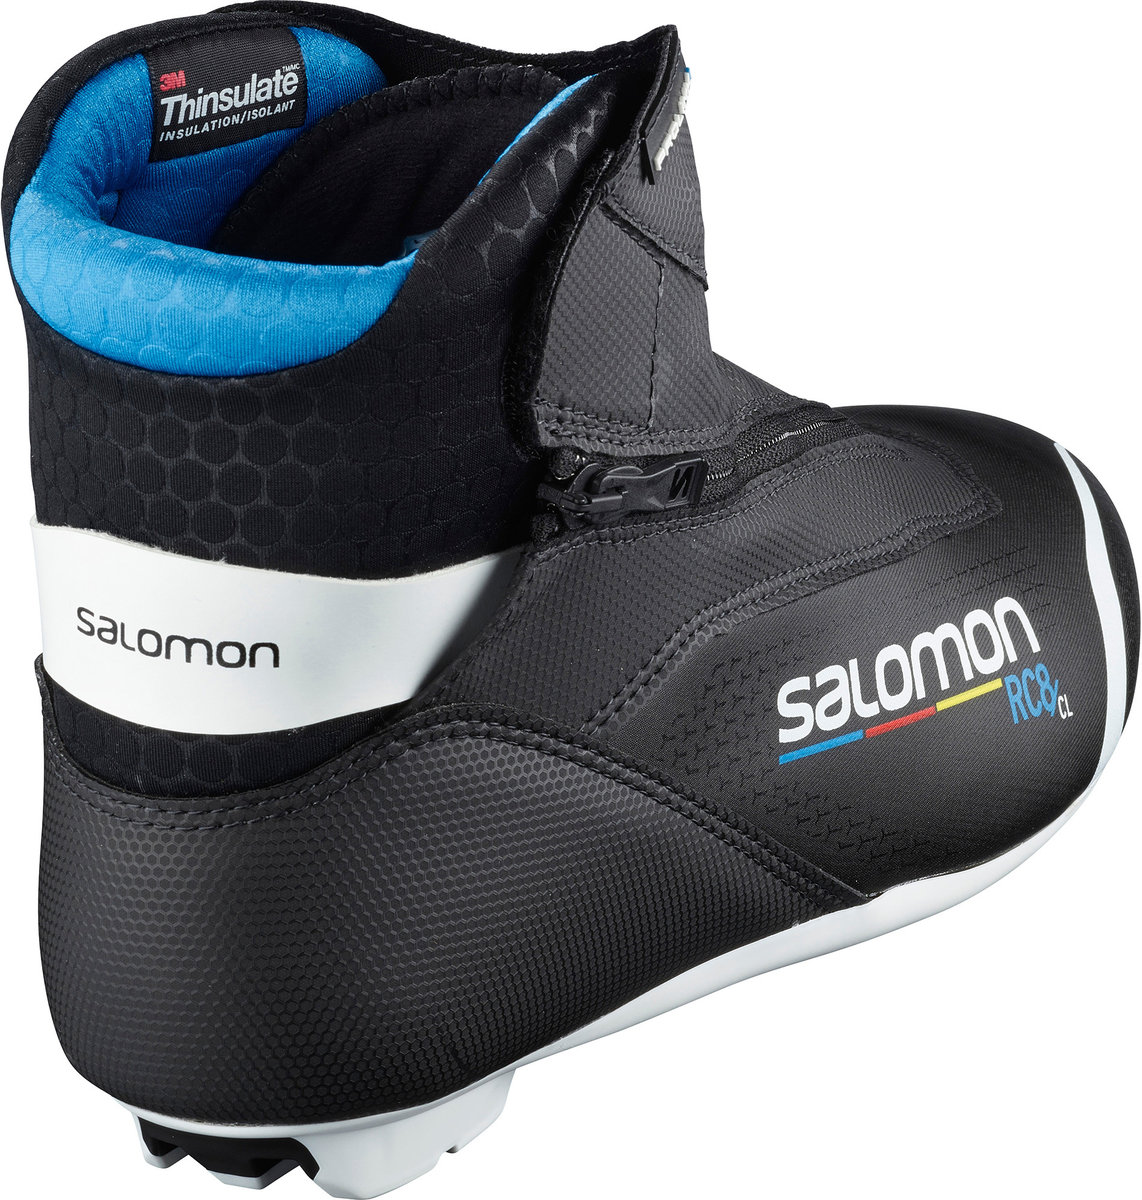 Salomon - www.arlbergsports.com